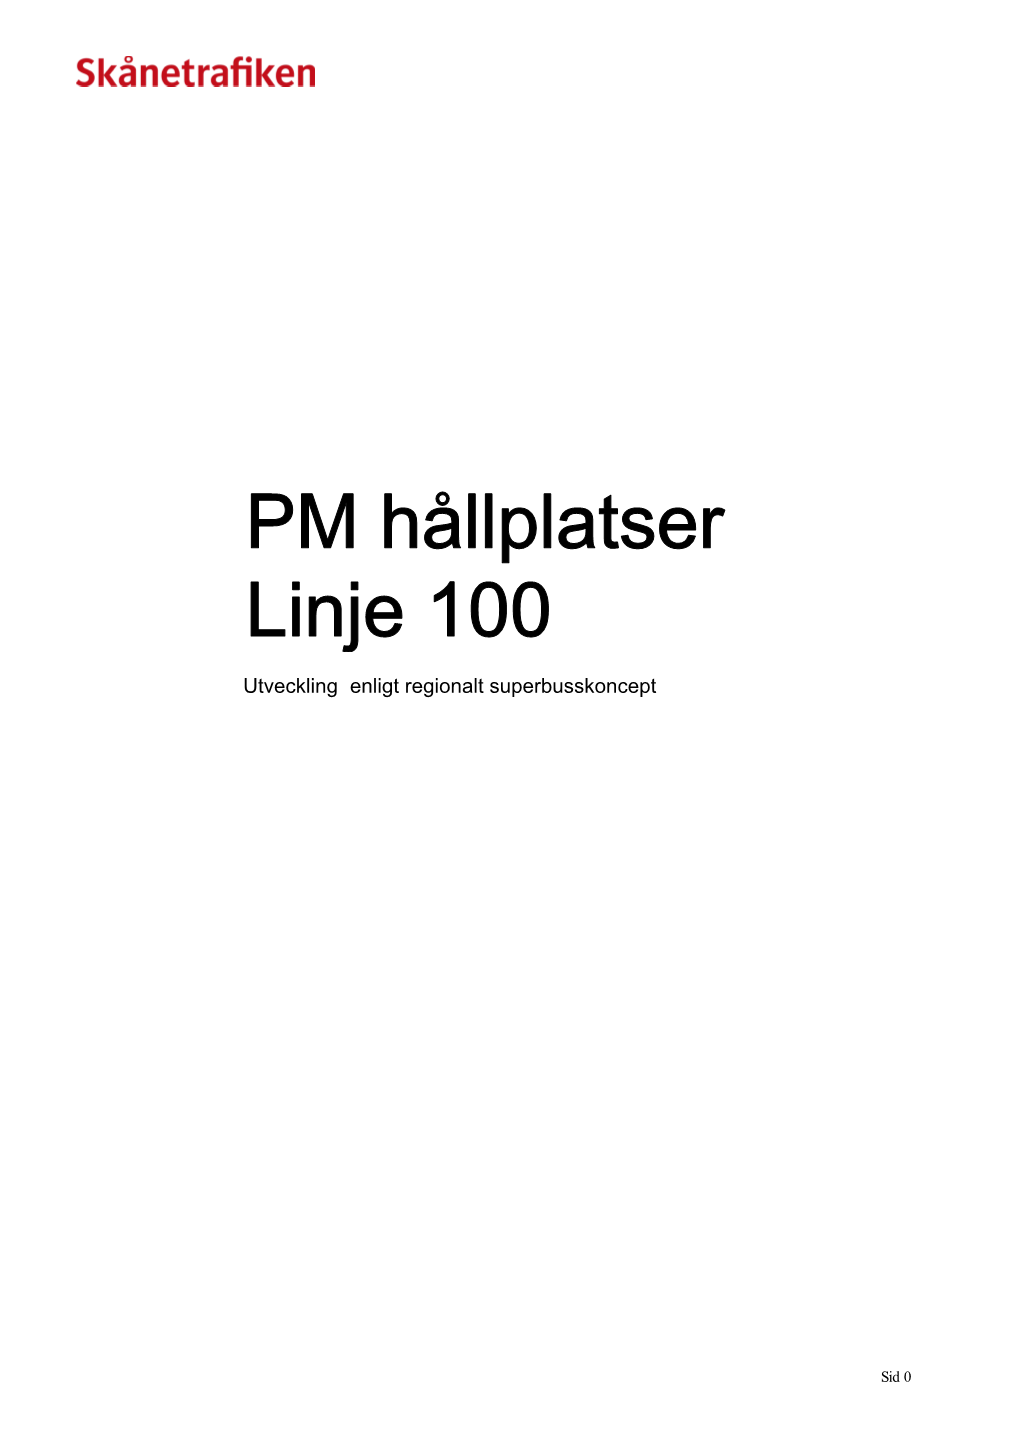 PM Hållplatser Linje 100.Pdf